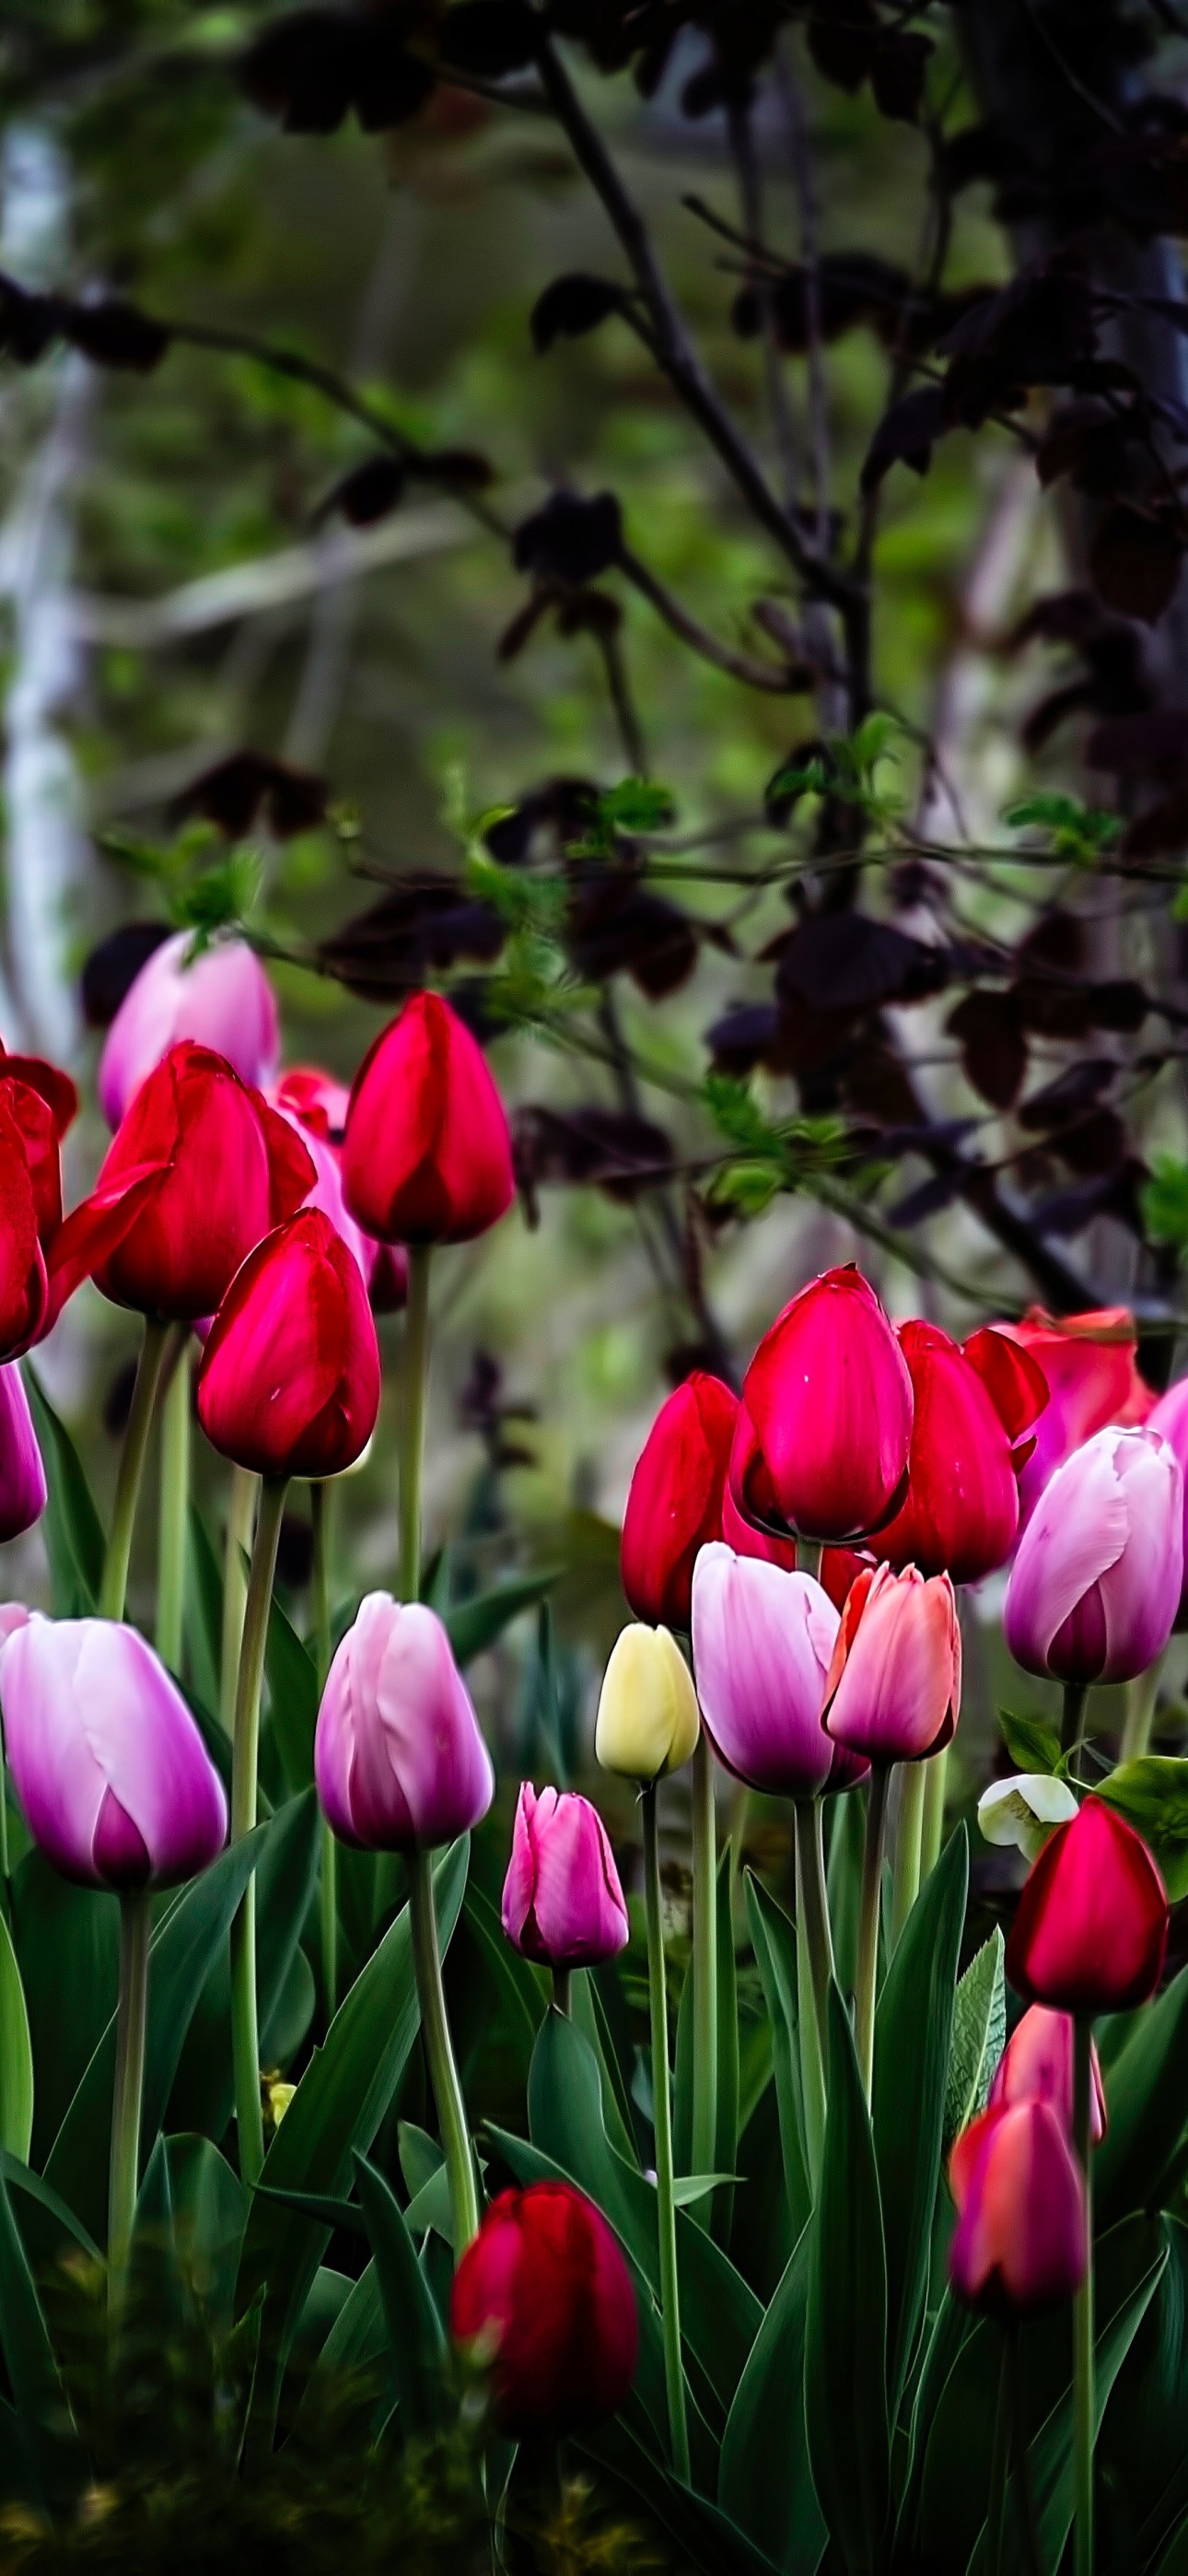 Tulip flower garden wallpapers  Tulip flower garden wallpap  Flickr